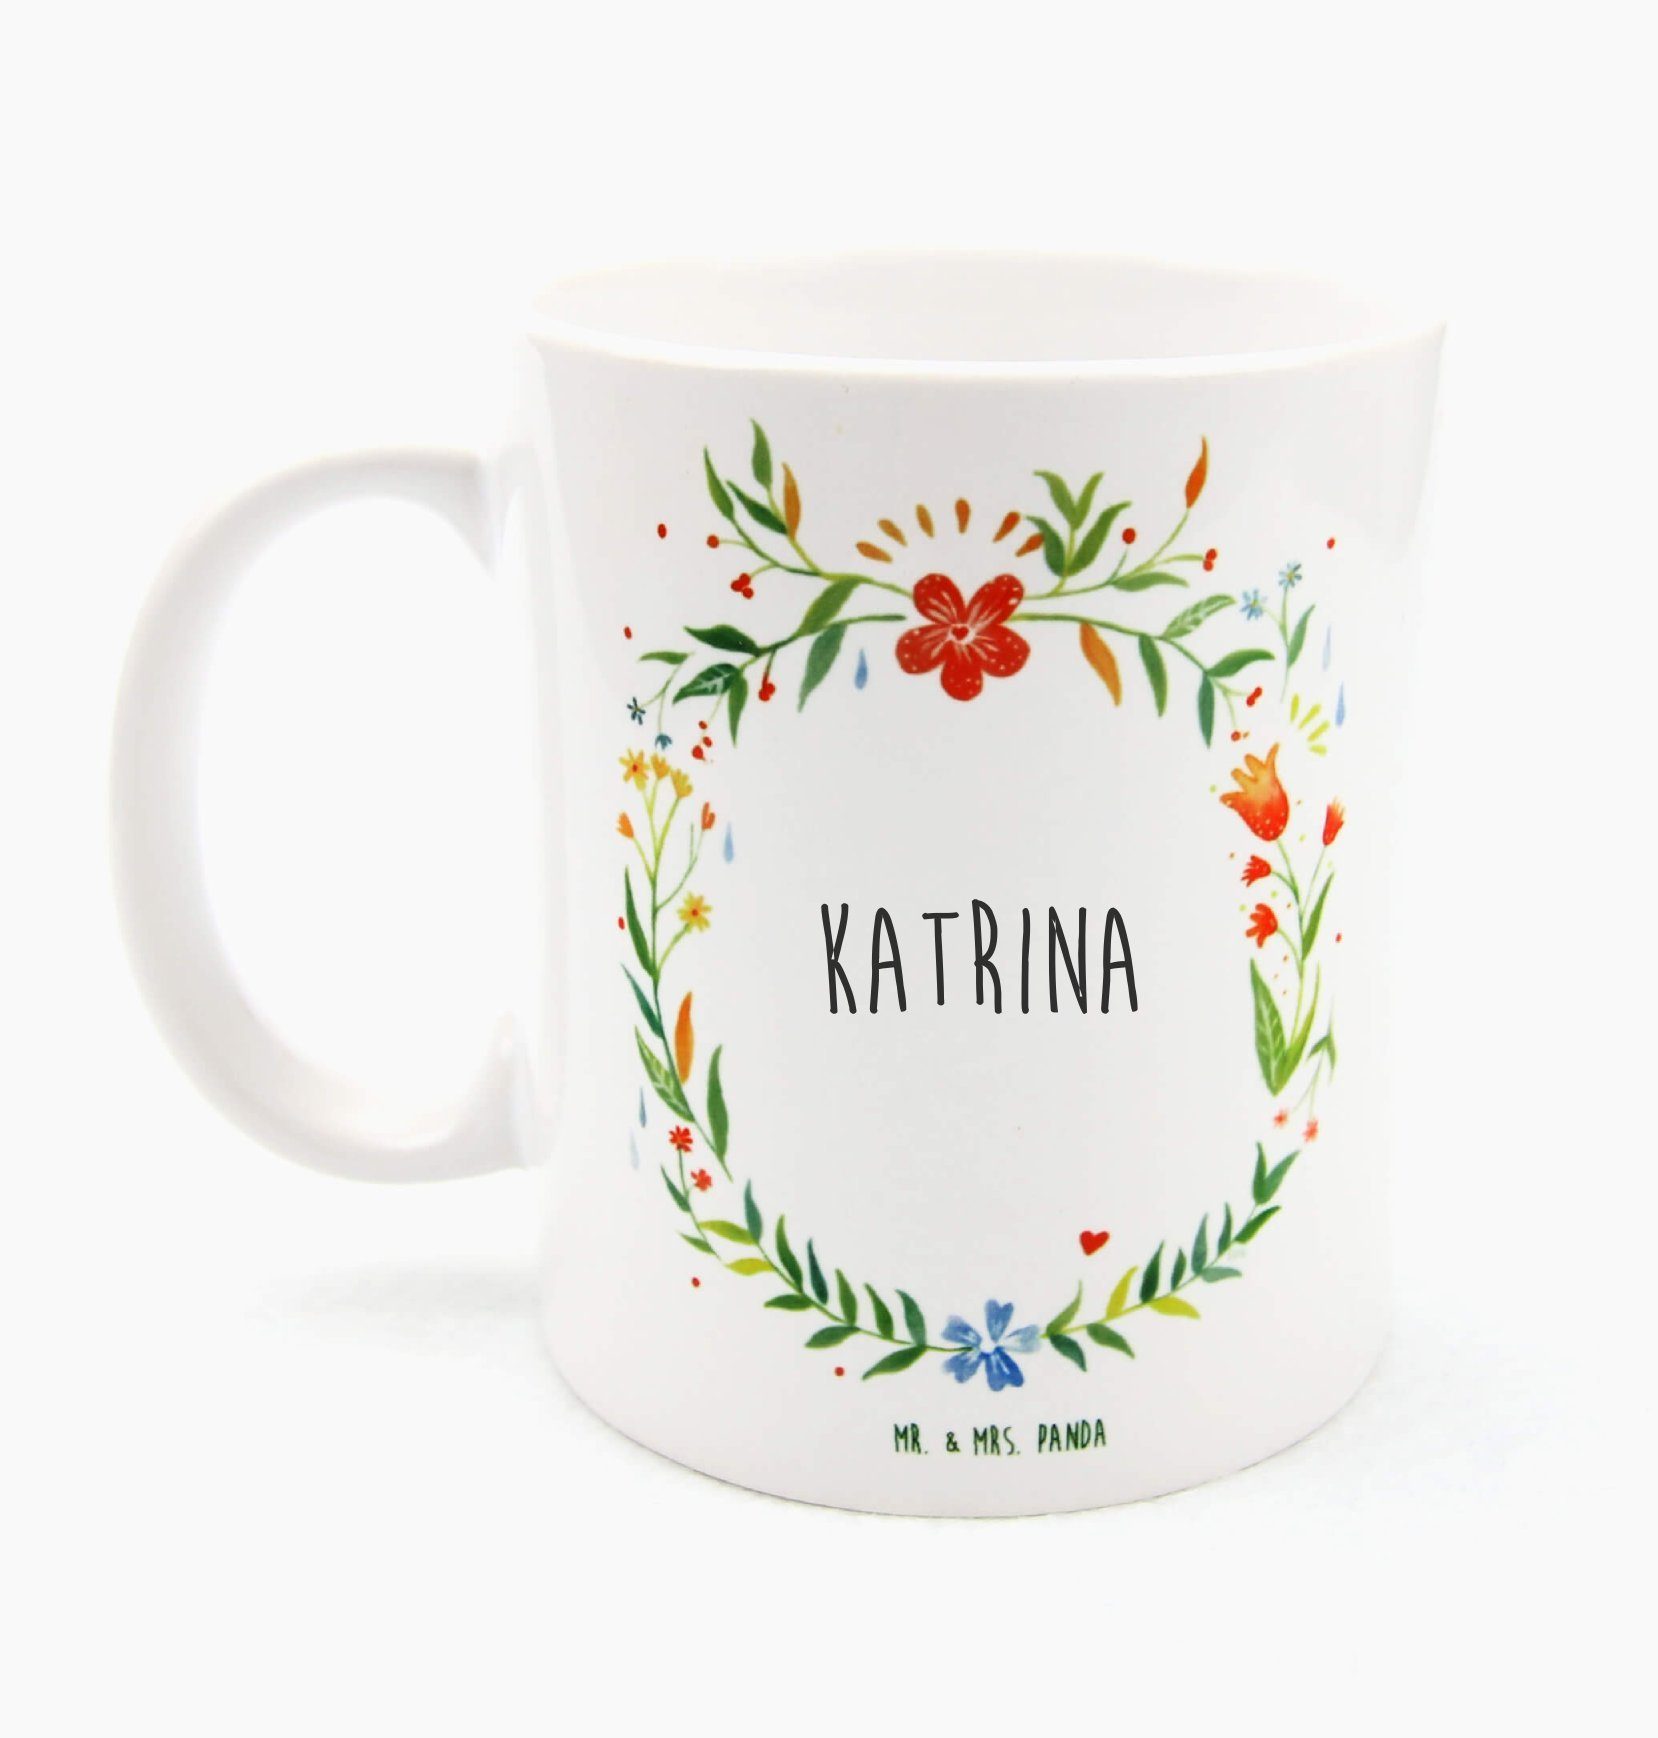 Mr. & Mrs. Panda Tasse Katrina - Geschenk, Teebecher, Geschenk Tasse, Keramiktasse, Kaffeebe, Keramik